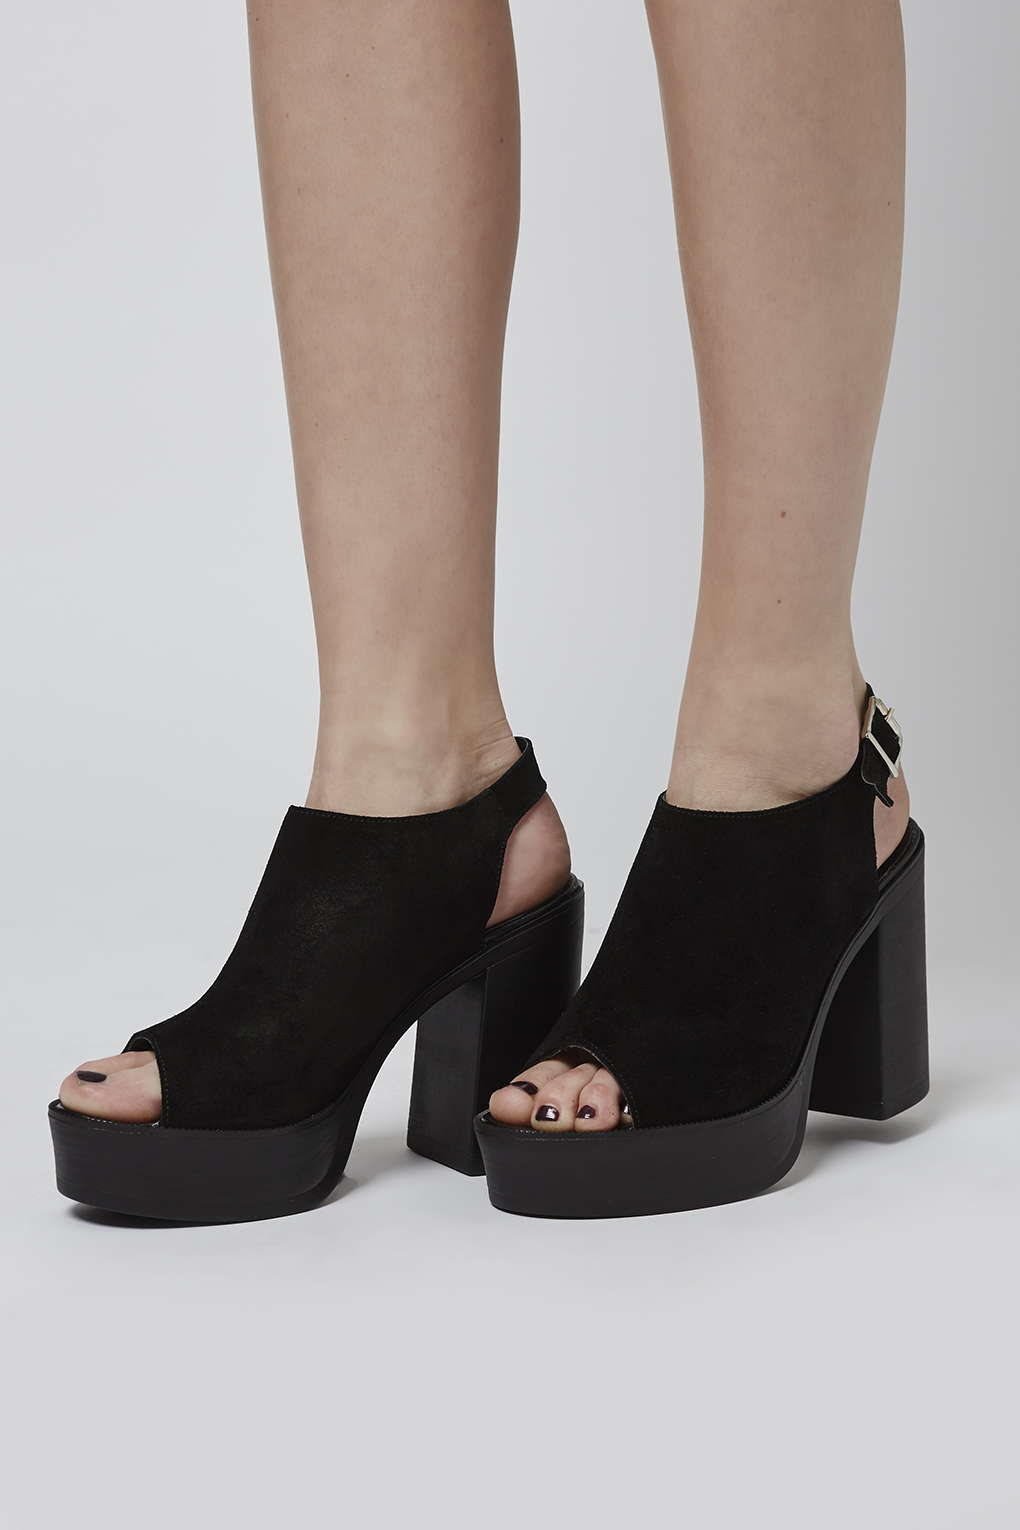 topshop chunky heels